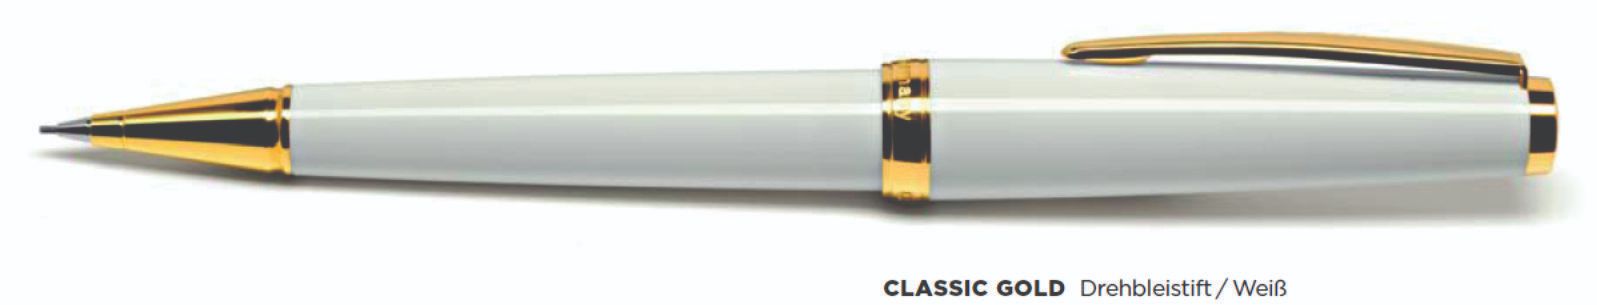 Cleo Pens CLASSIC GOLD Drehbleistift Wei Lead pencil